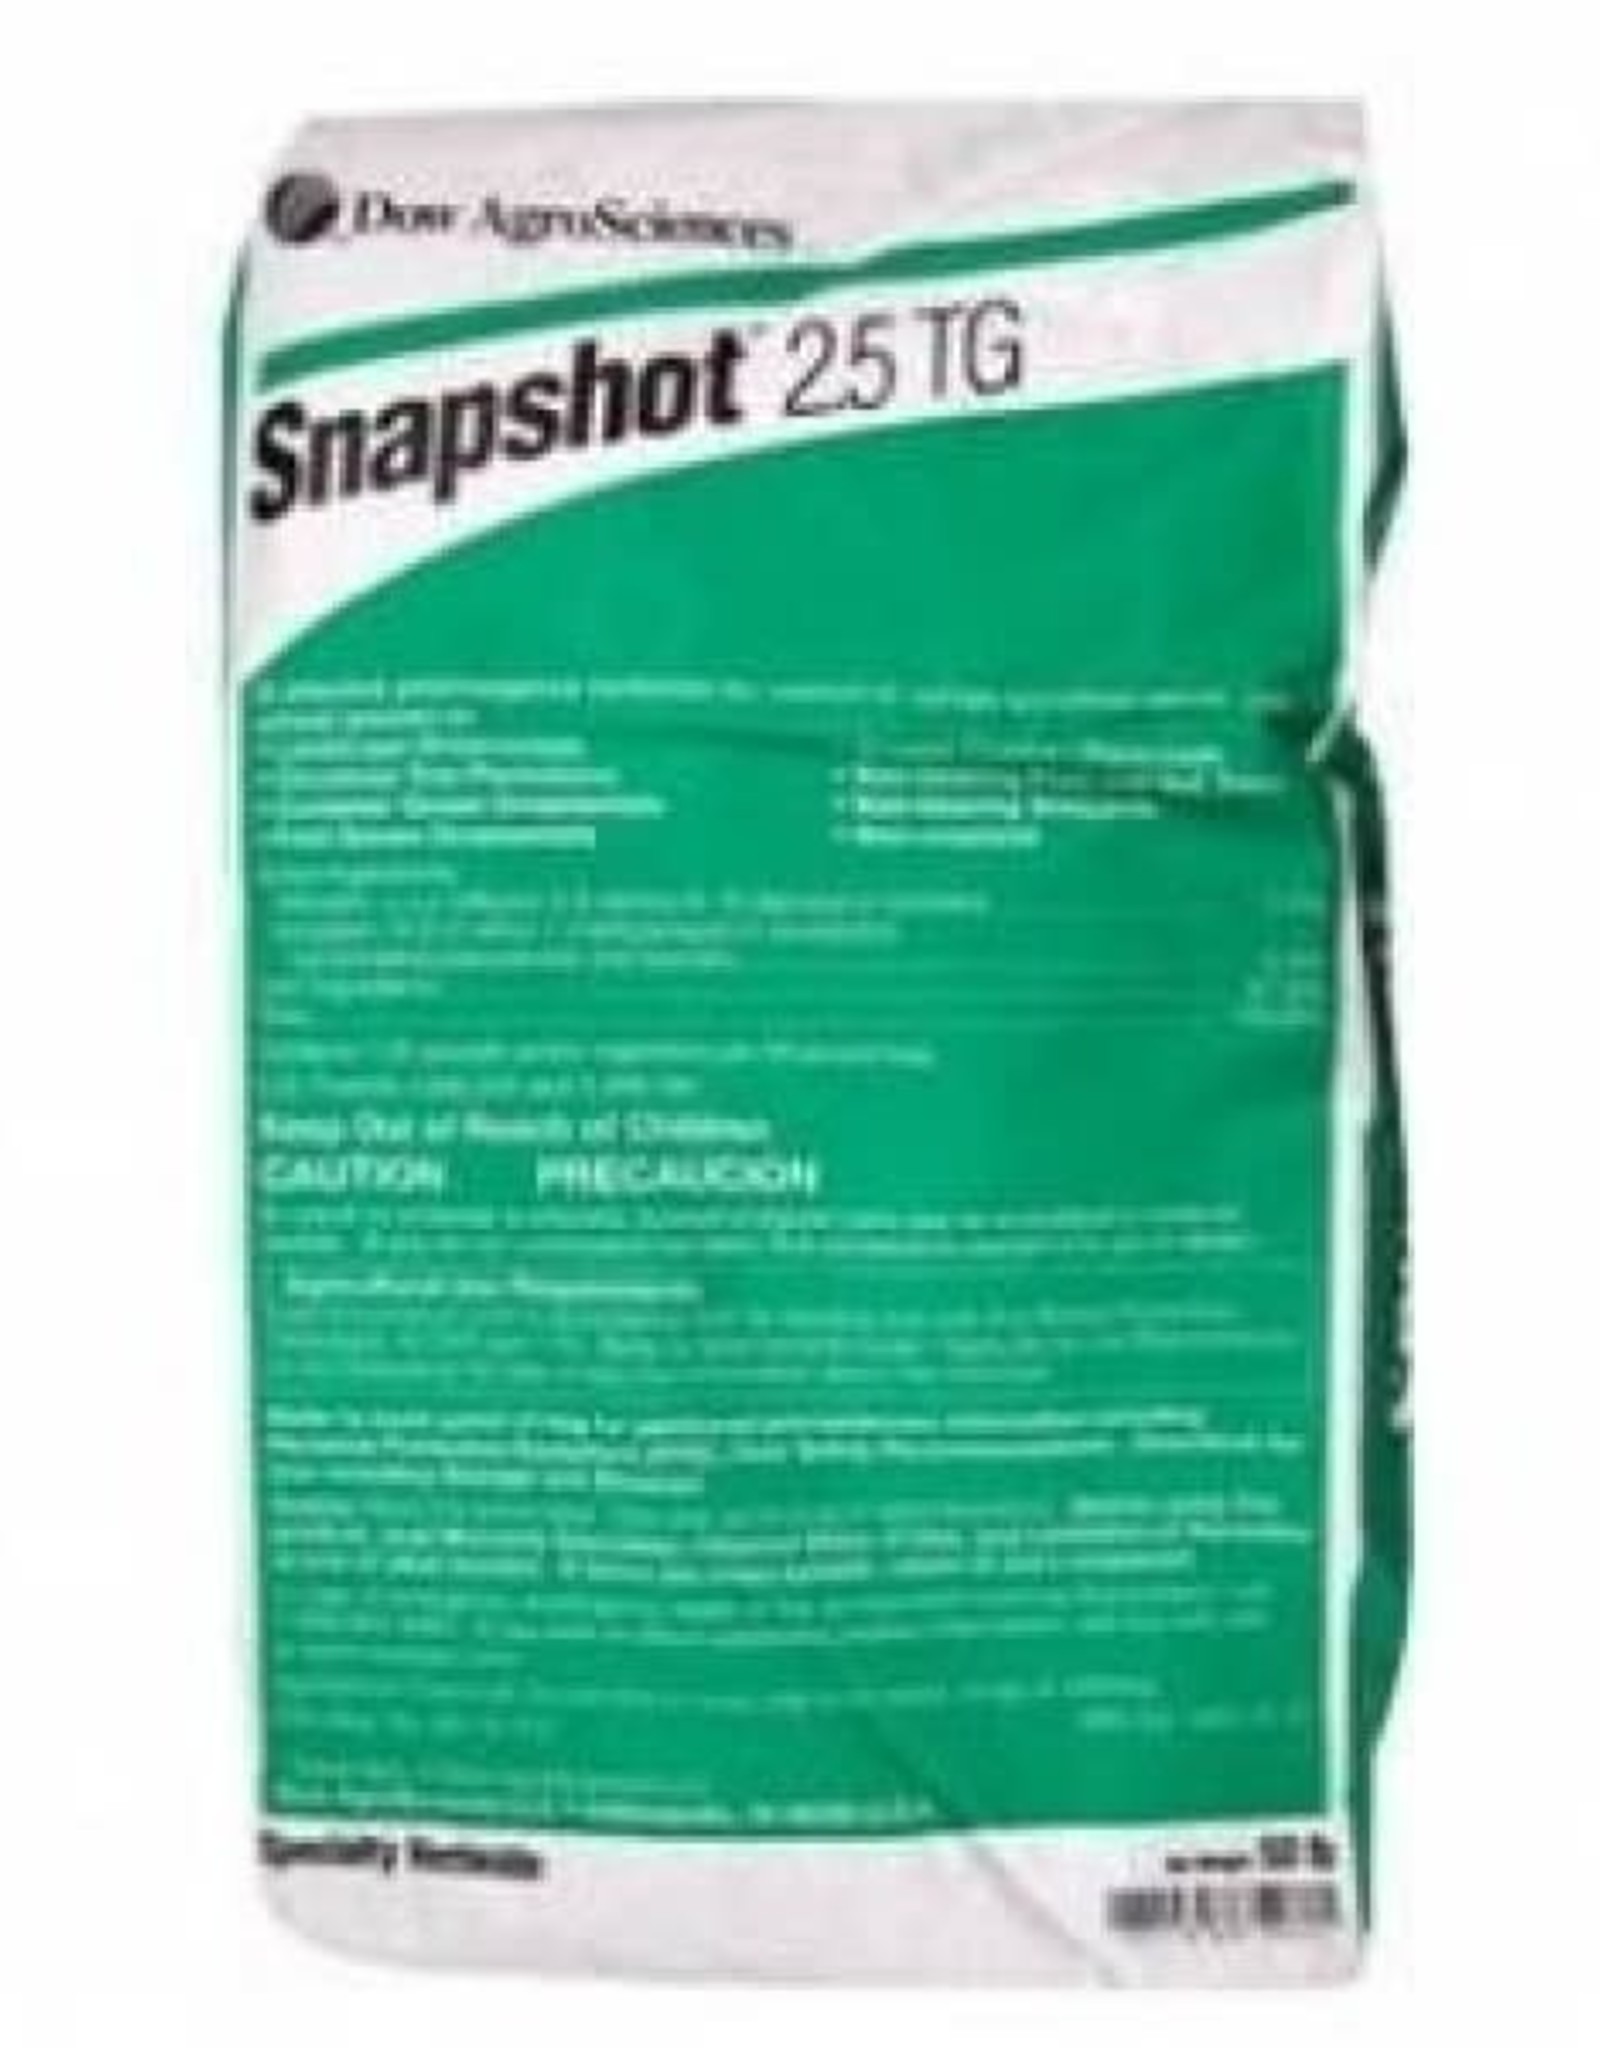 Snapshot Snapshot 2.5 TG Pre-Emergent Granular Herbicide 50lb